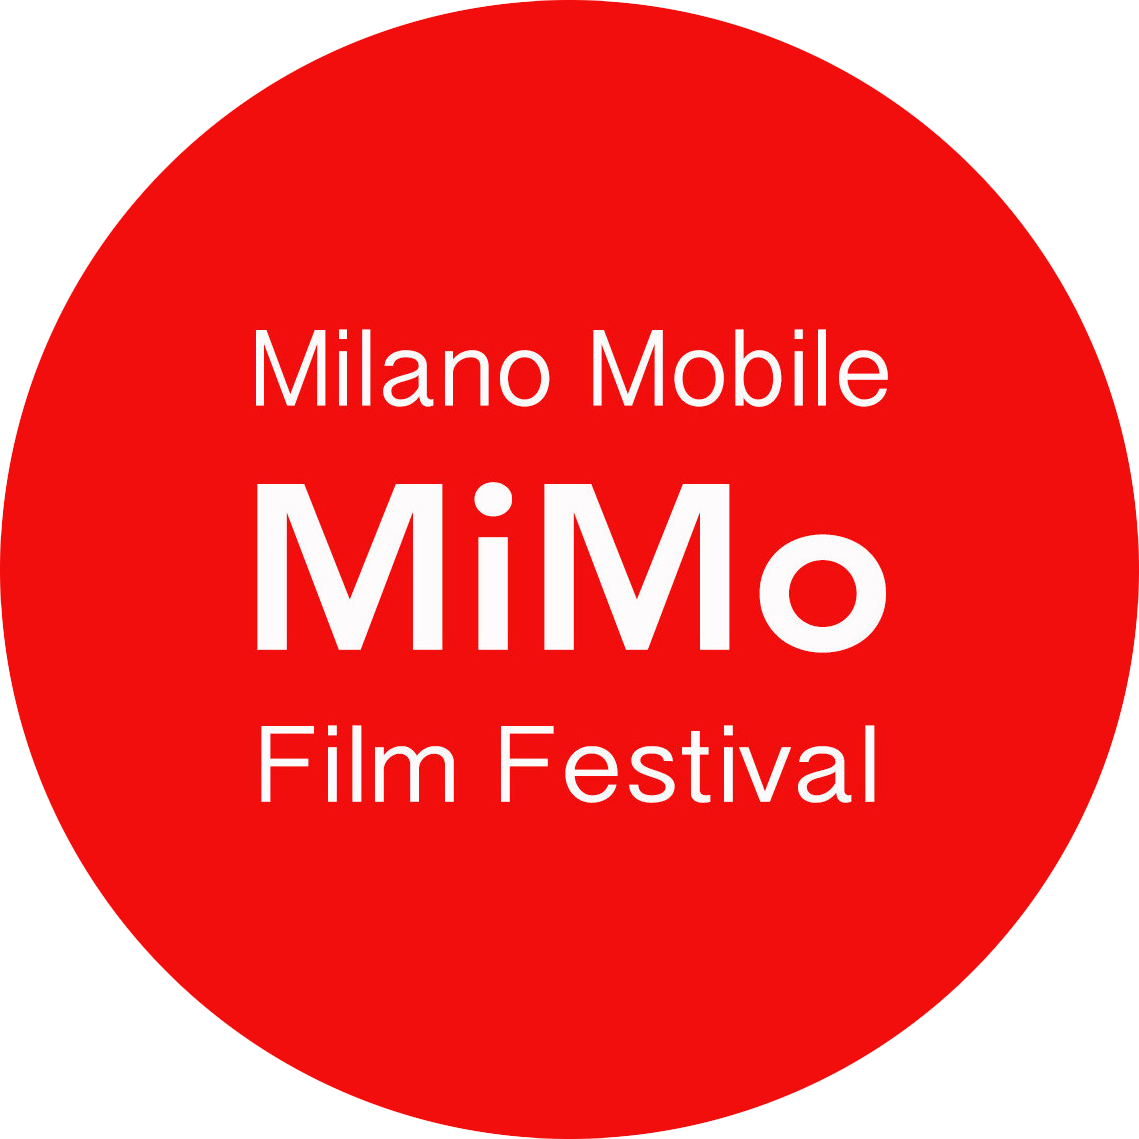 Milano Mobile Film Festival